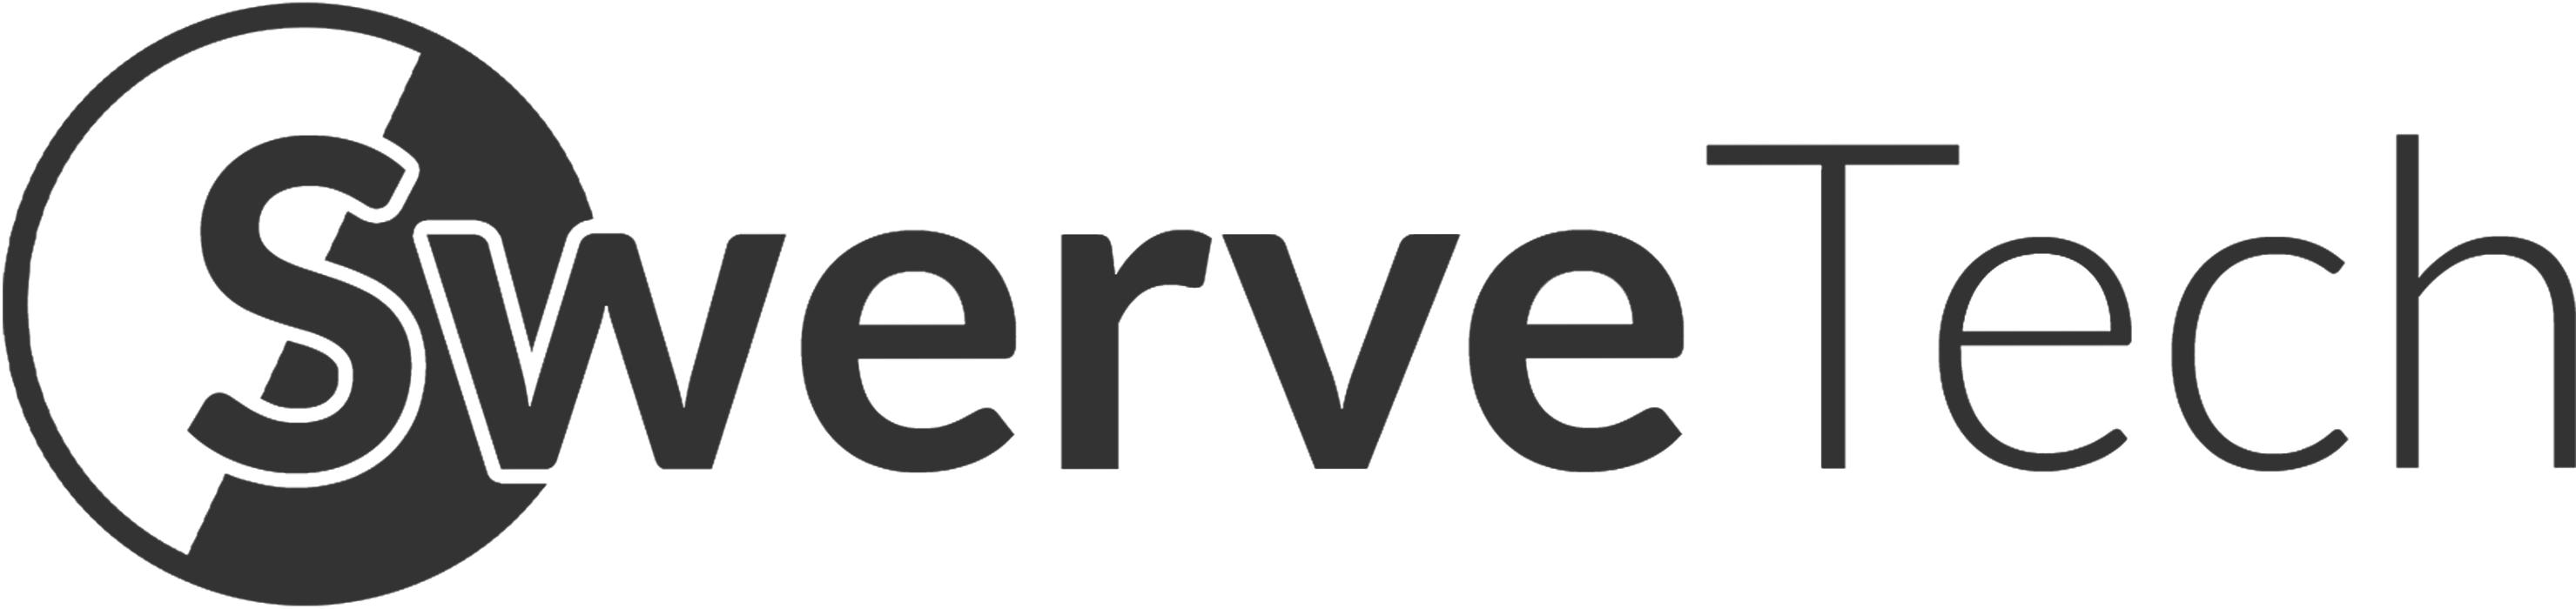 SwerveTech